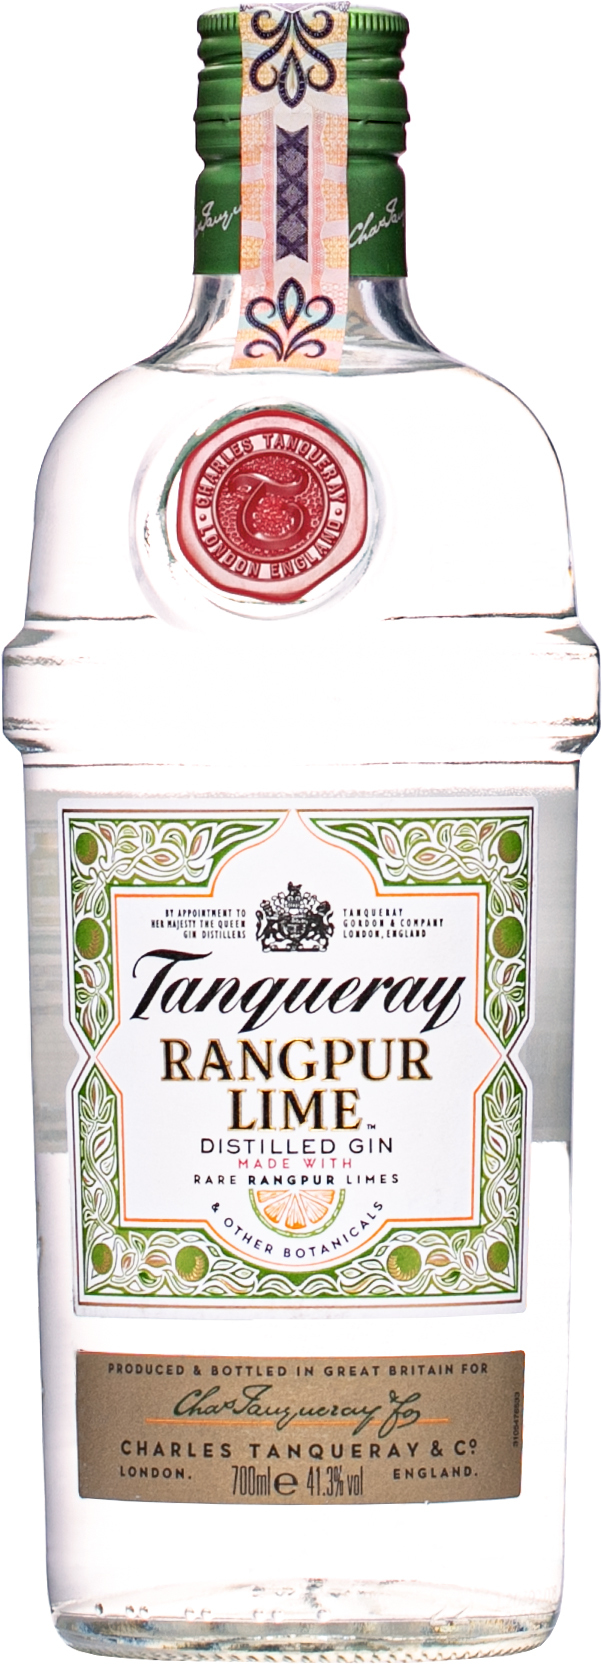 Tanqueray Rangpur Lime - Flavored Gin | Bondston